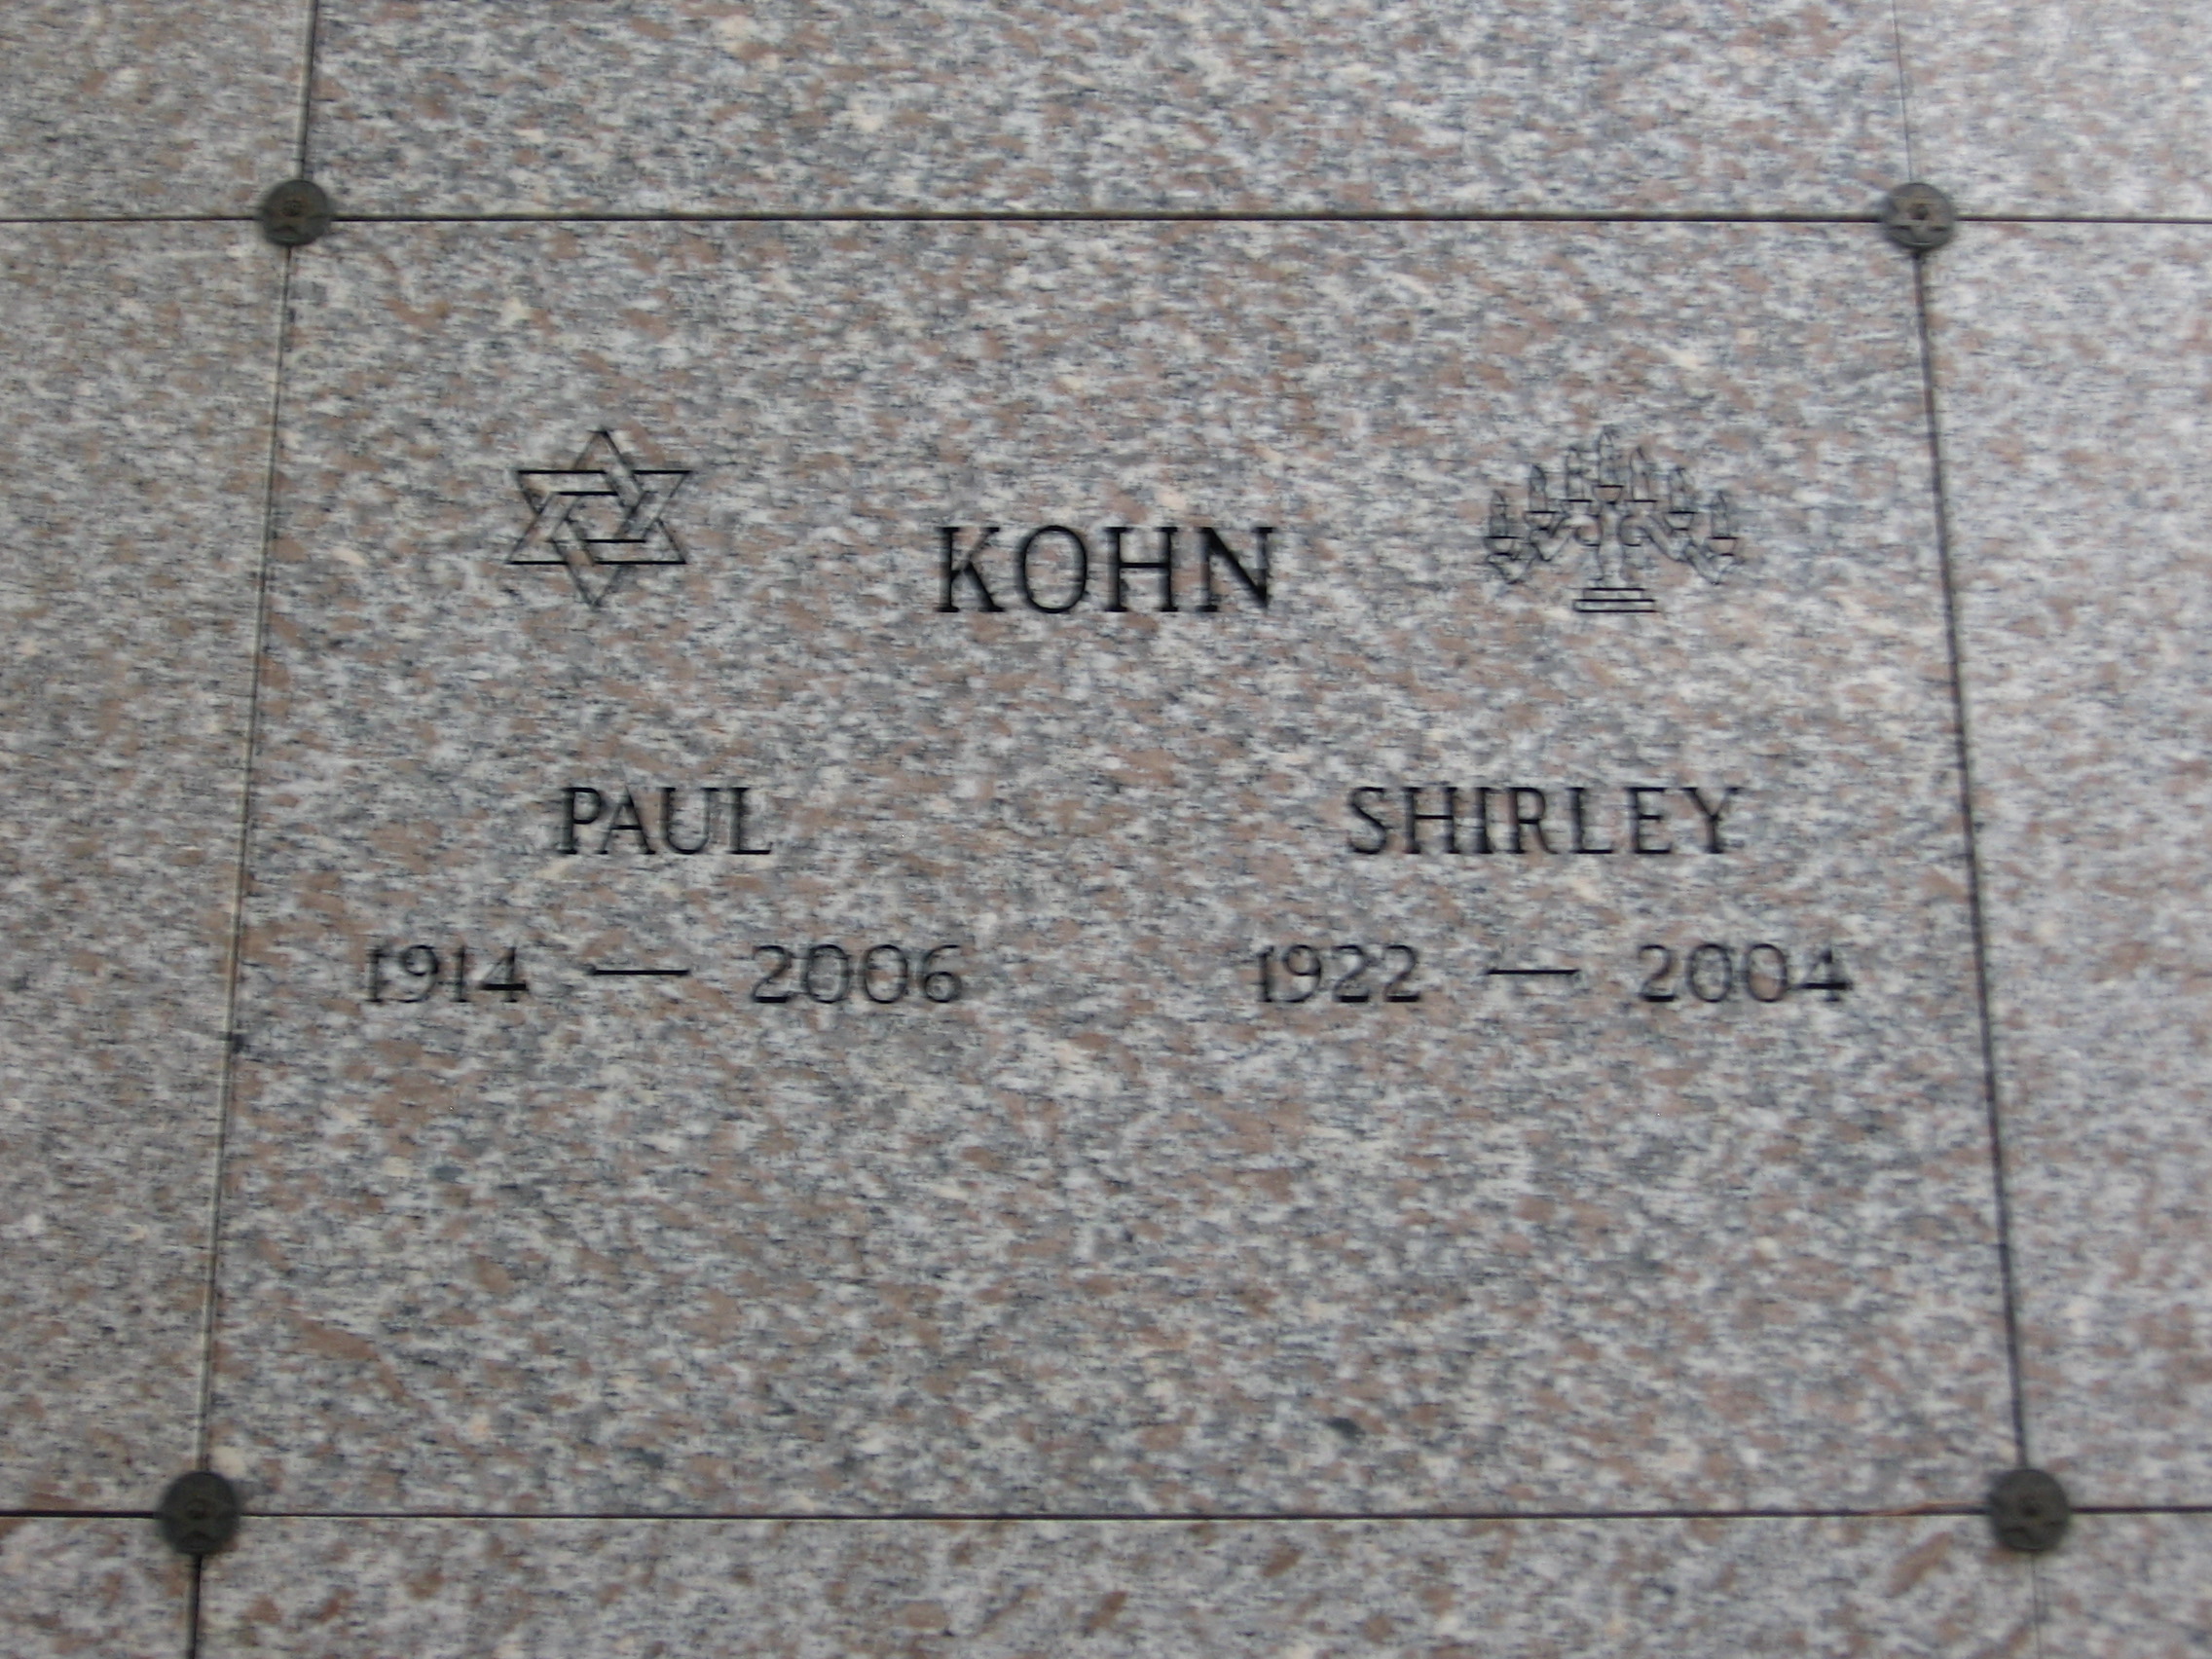 Shirley Kohn